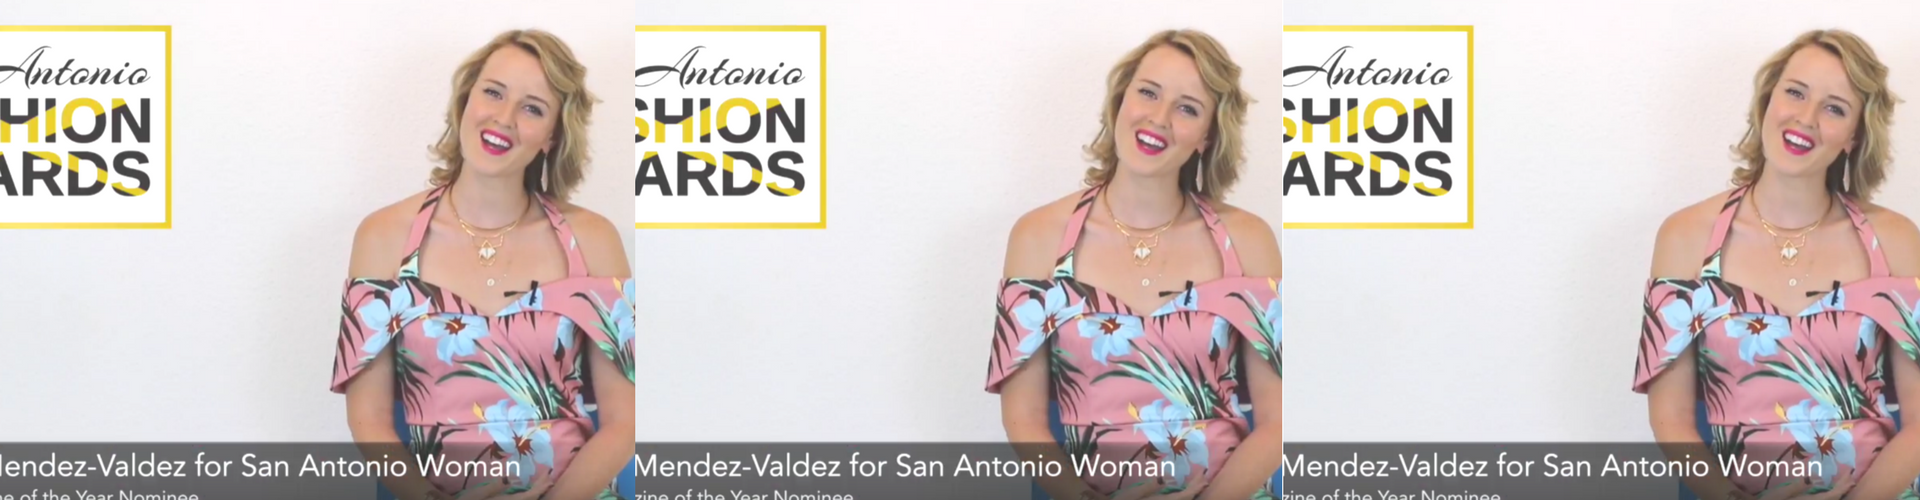 Vote for San Antonio Woman for the Fashion Awards!